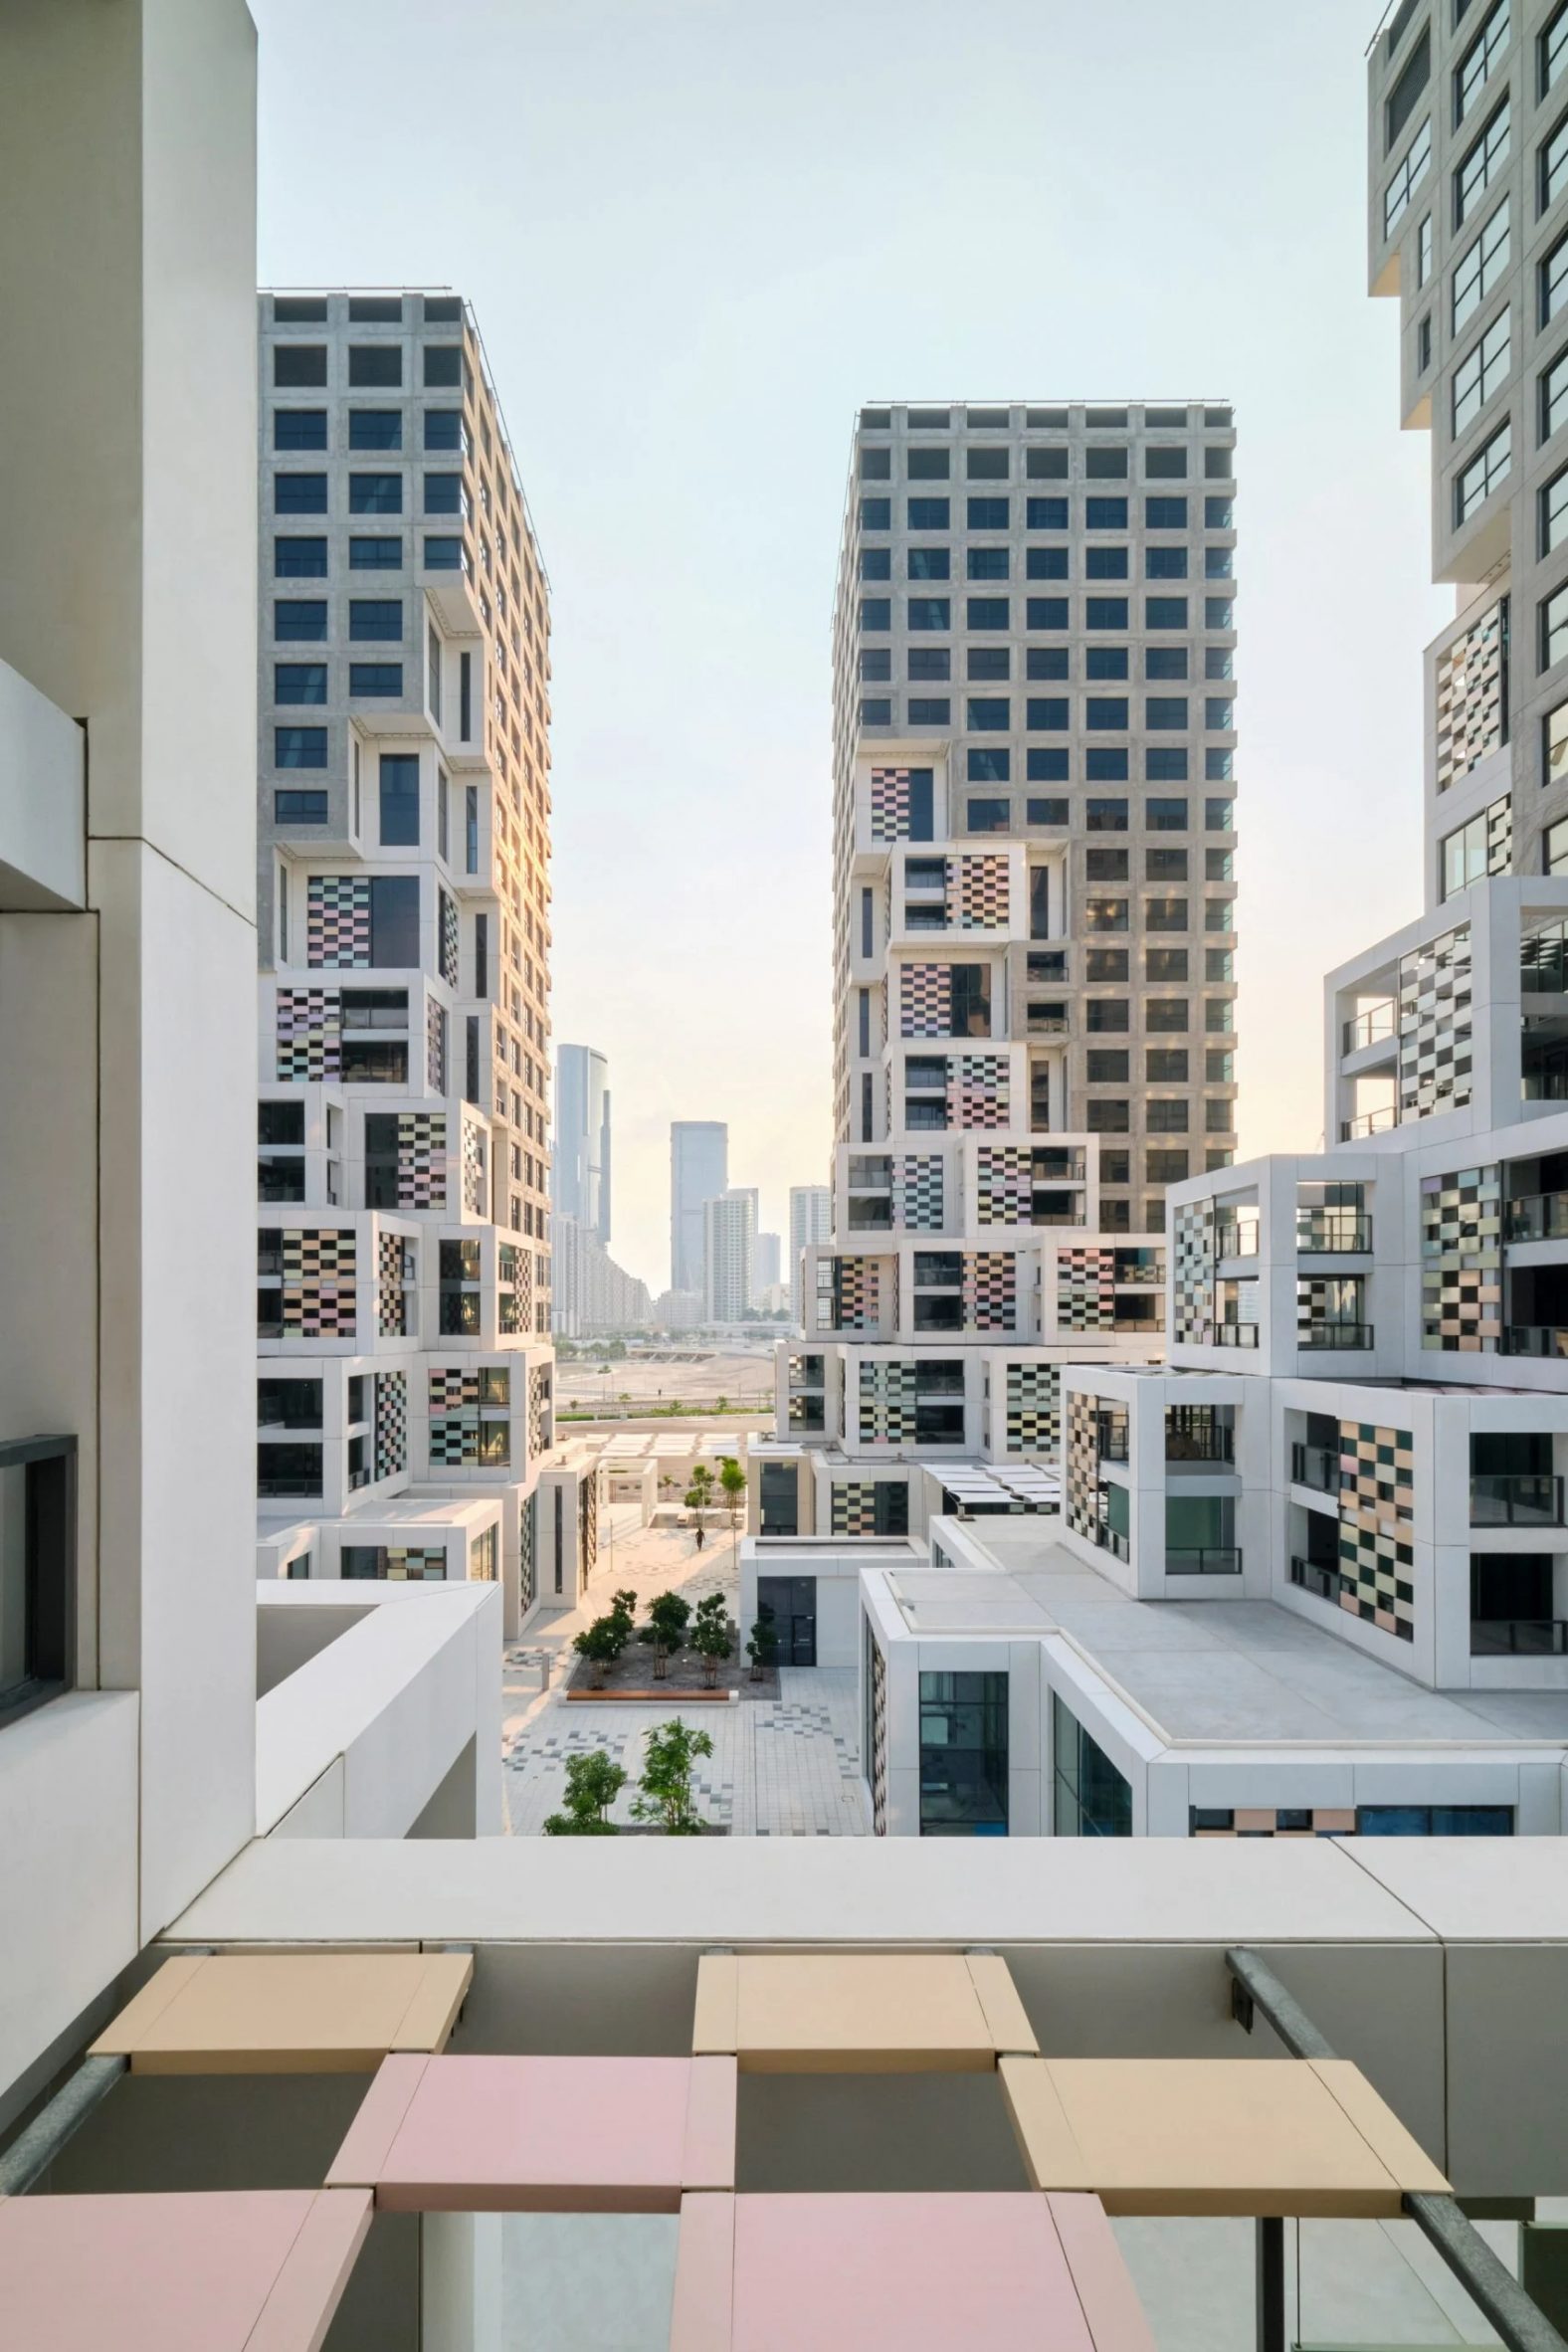 Pixel housing development towers